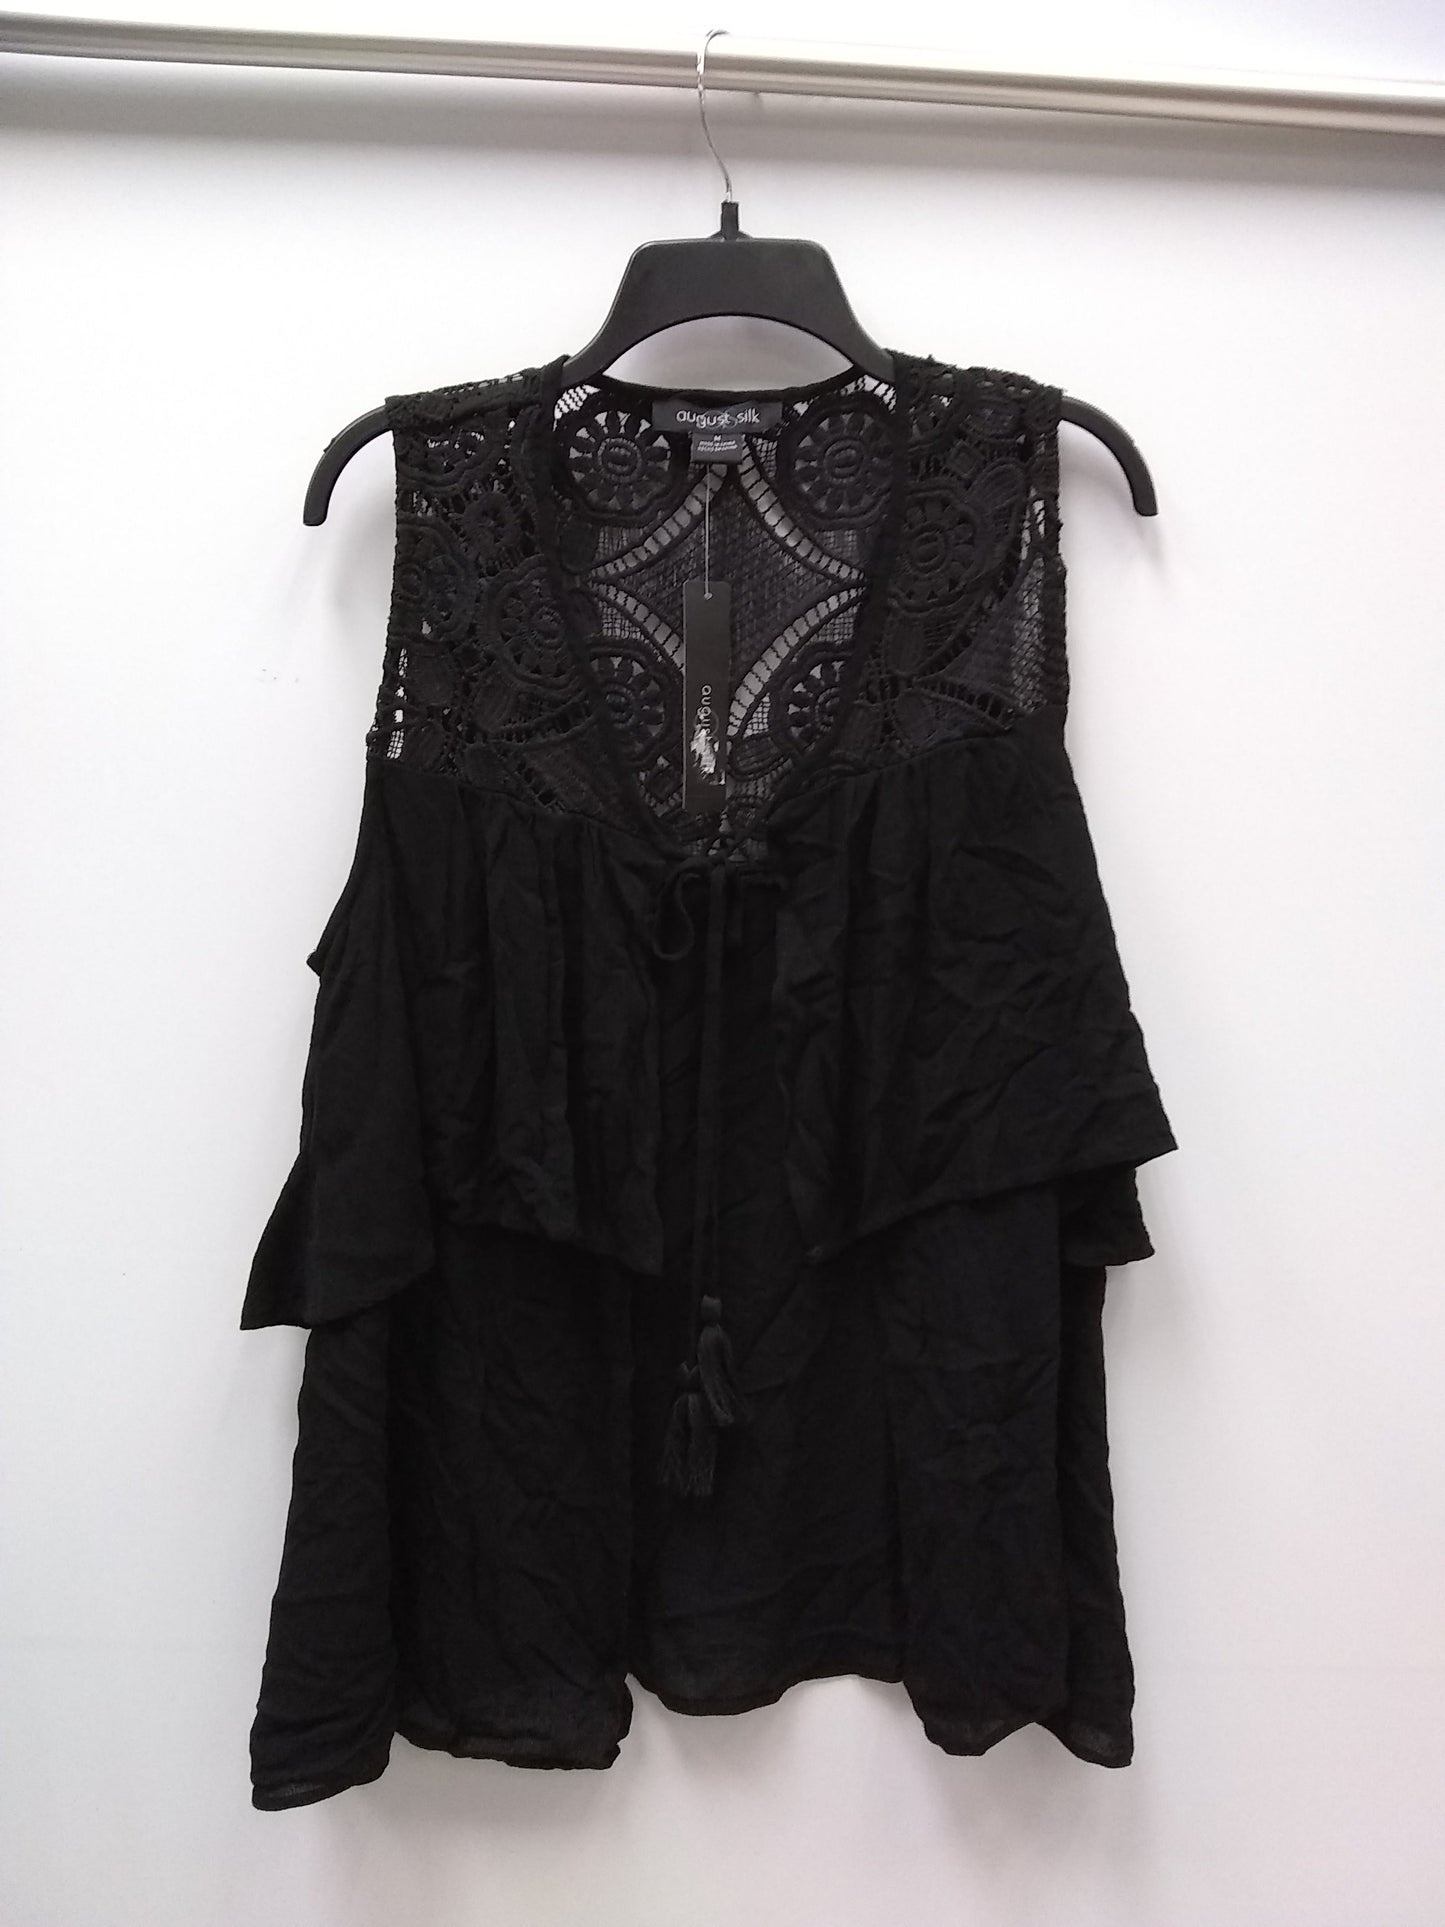 August Silk Tiered Crochet-Contrast Vest Black M MSRP: $50